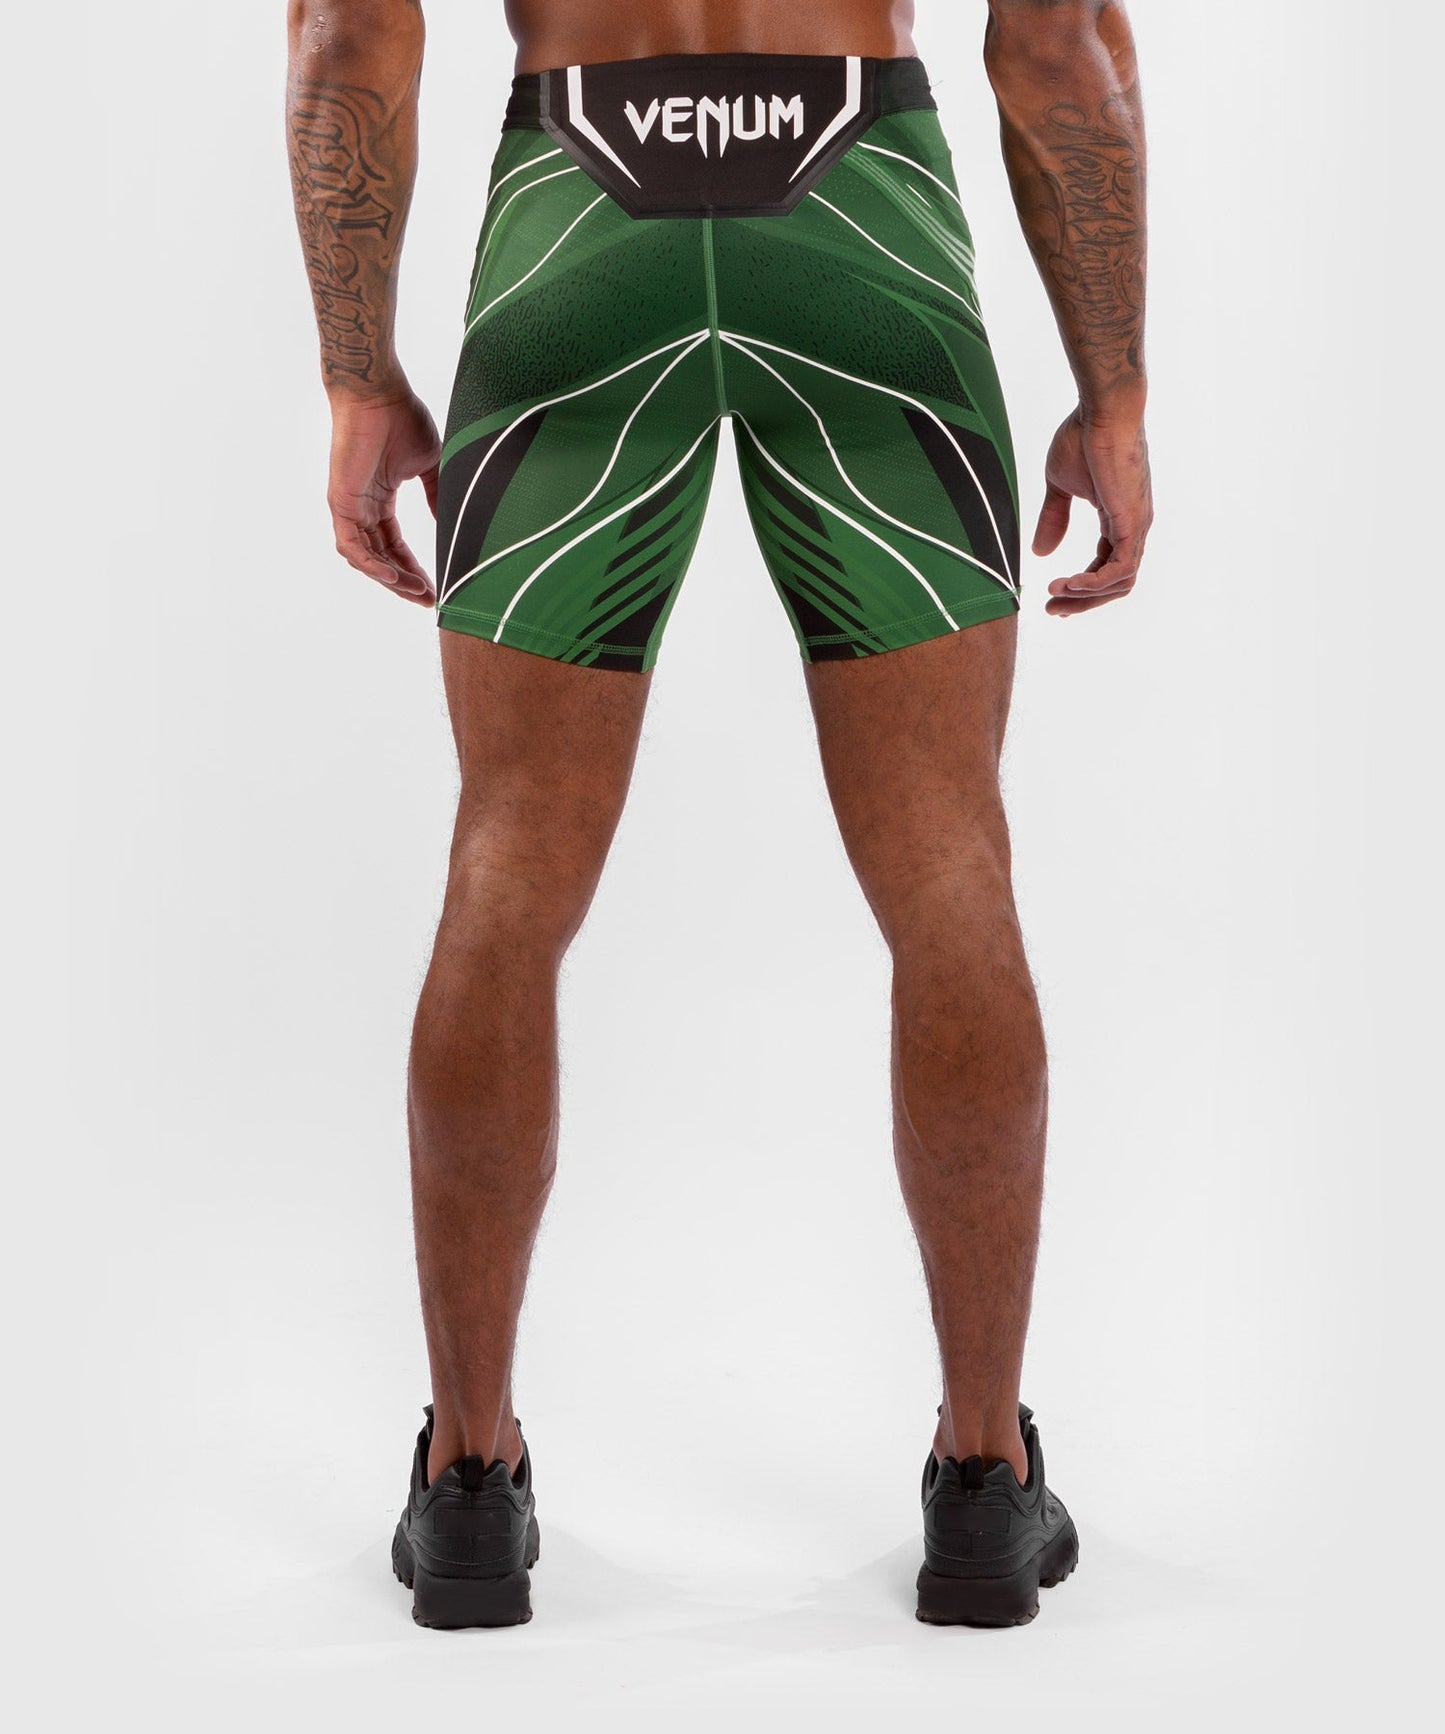 UFC Venum Authentic Fight Night Men's Vale Tudo Shorts - Long Fit - Green